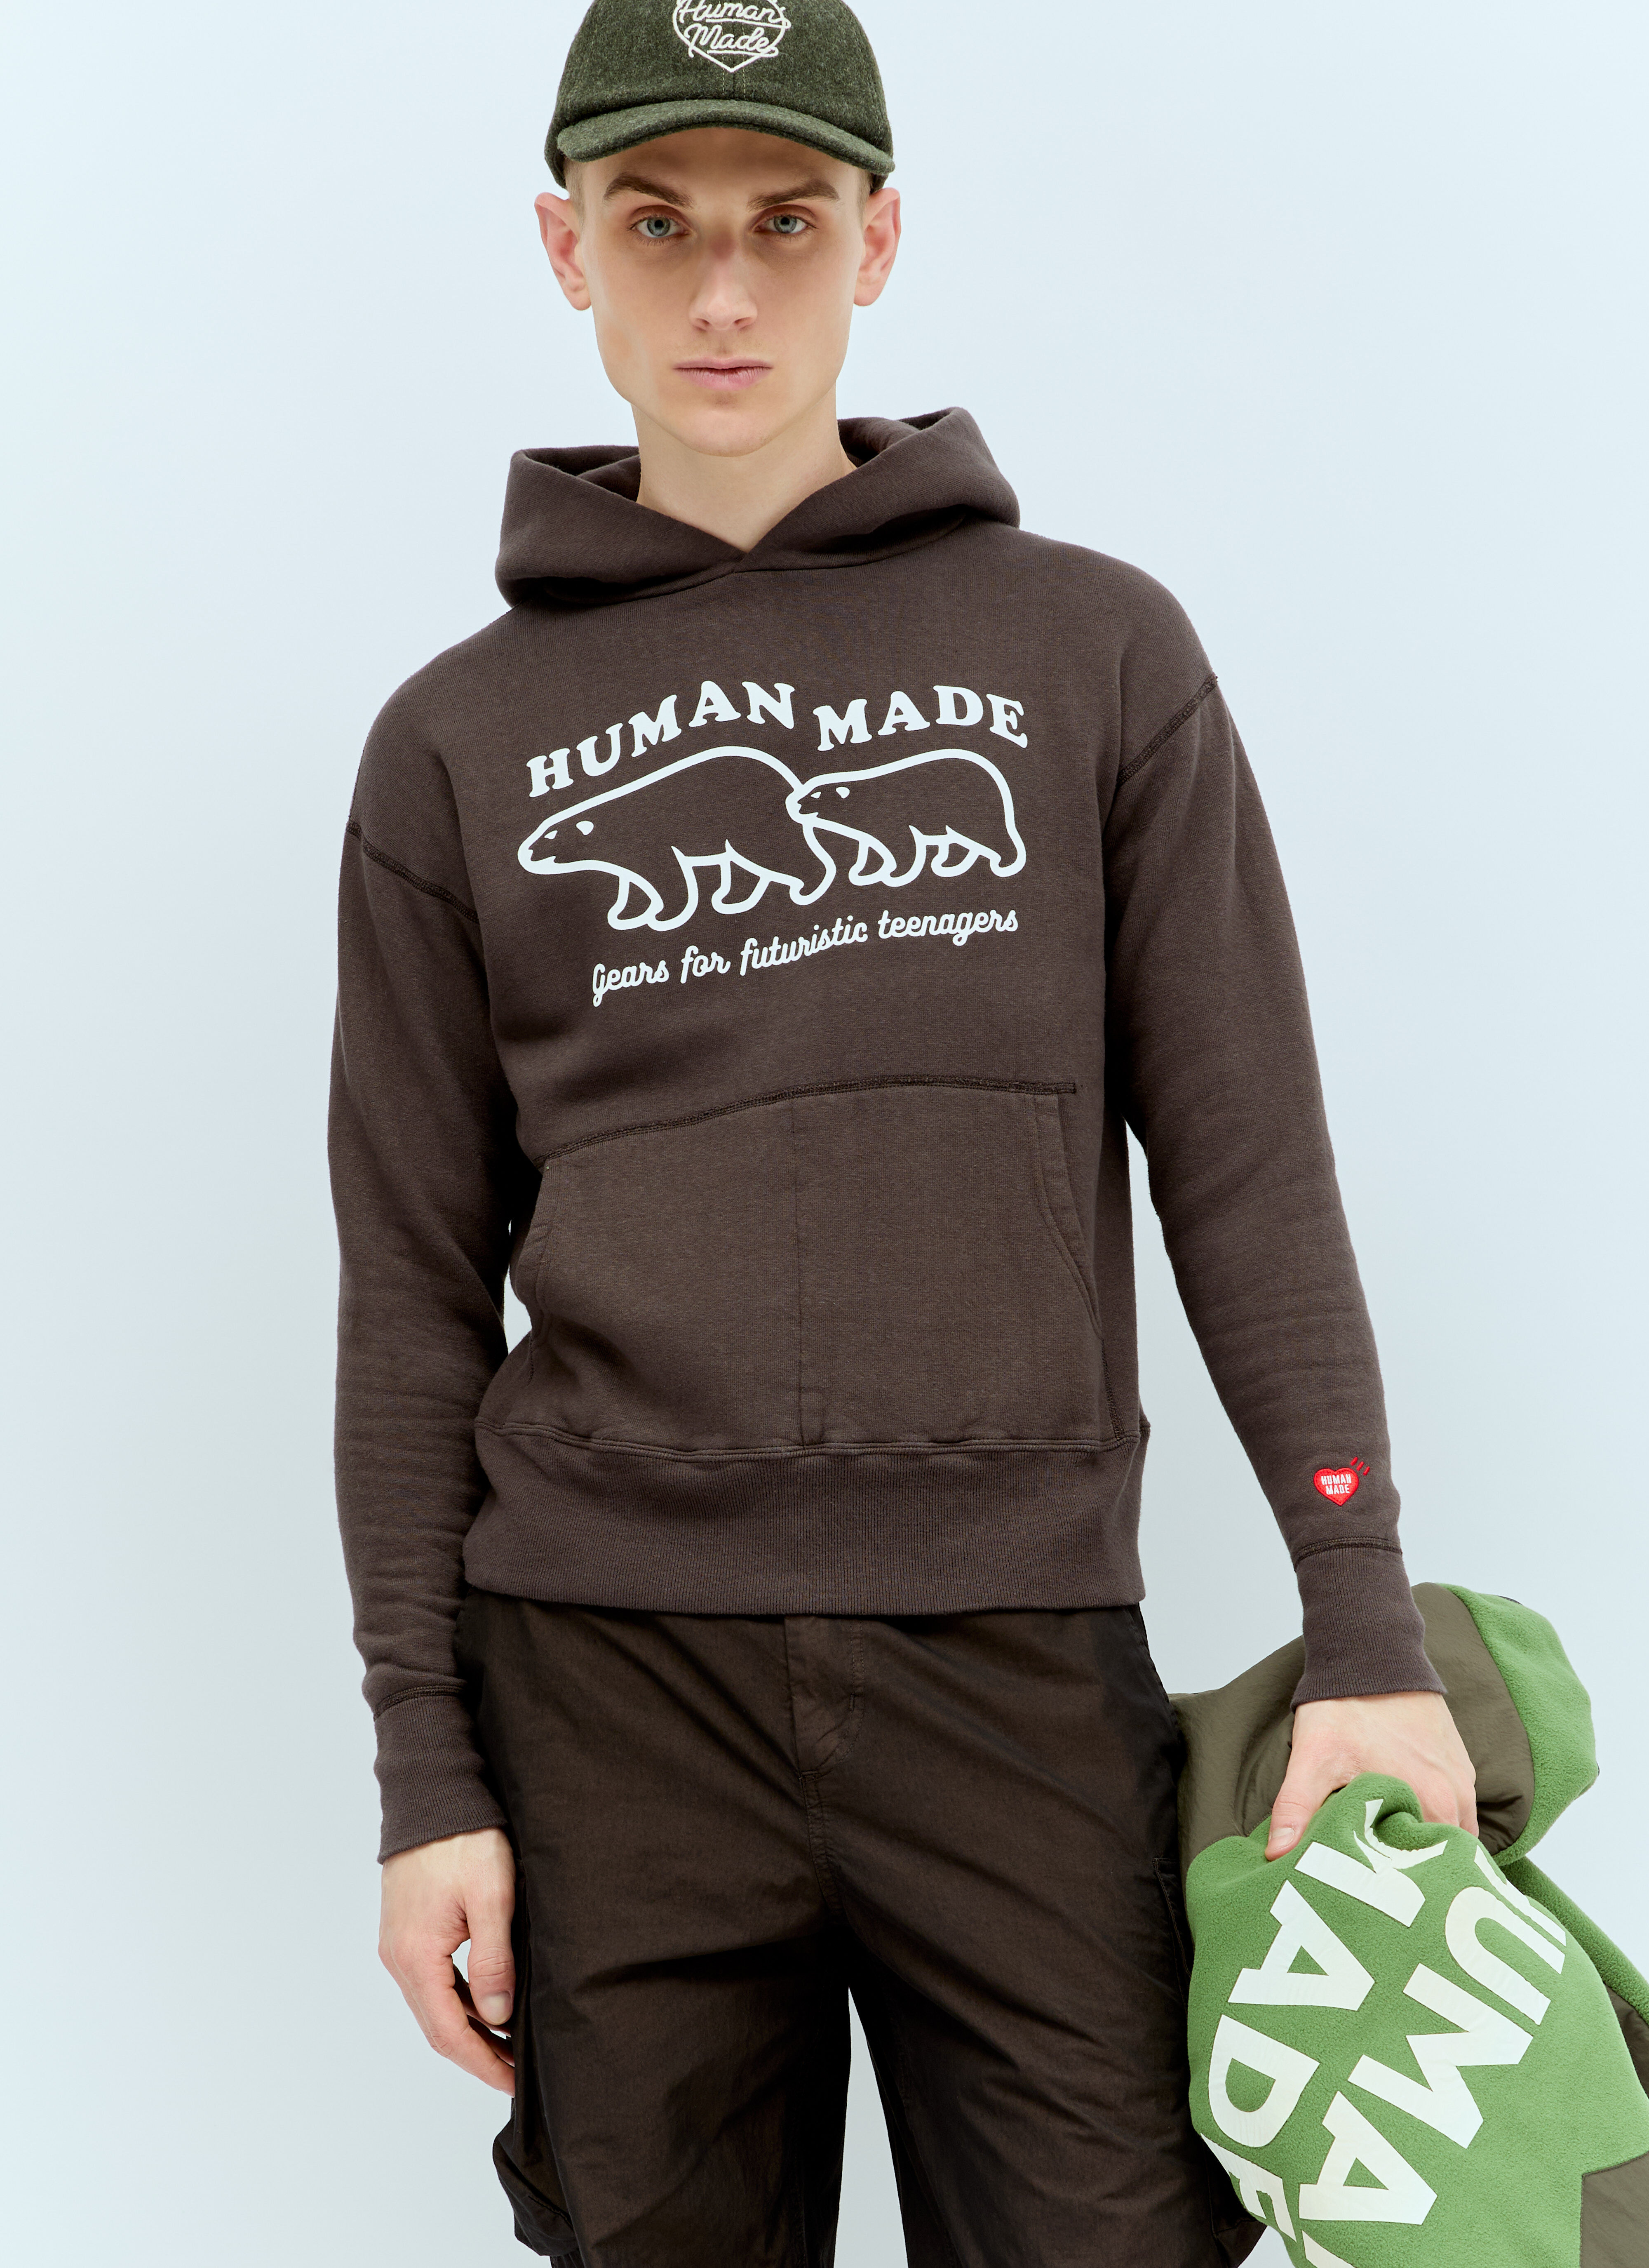 Human Made Tsuriami Hooded Sweatshirt Green hmd0156001